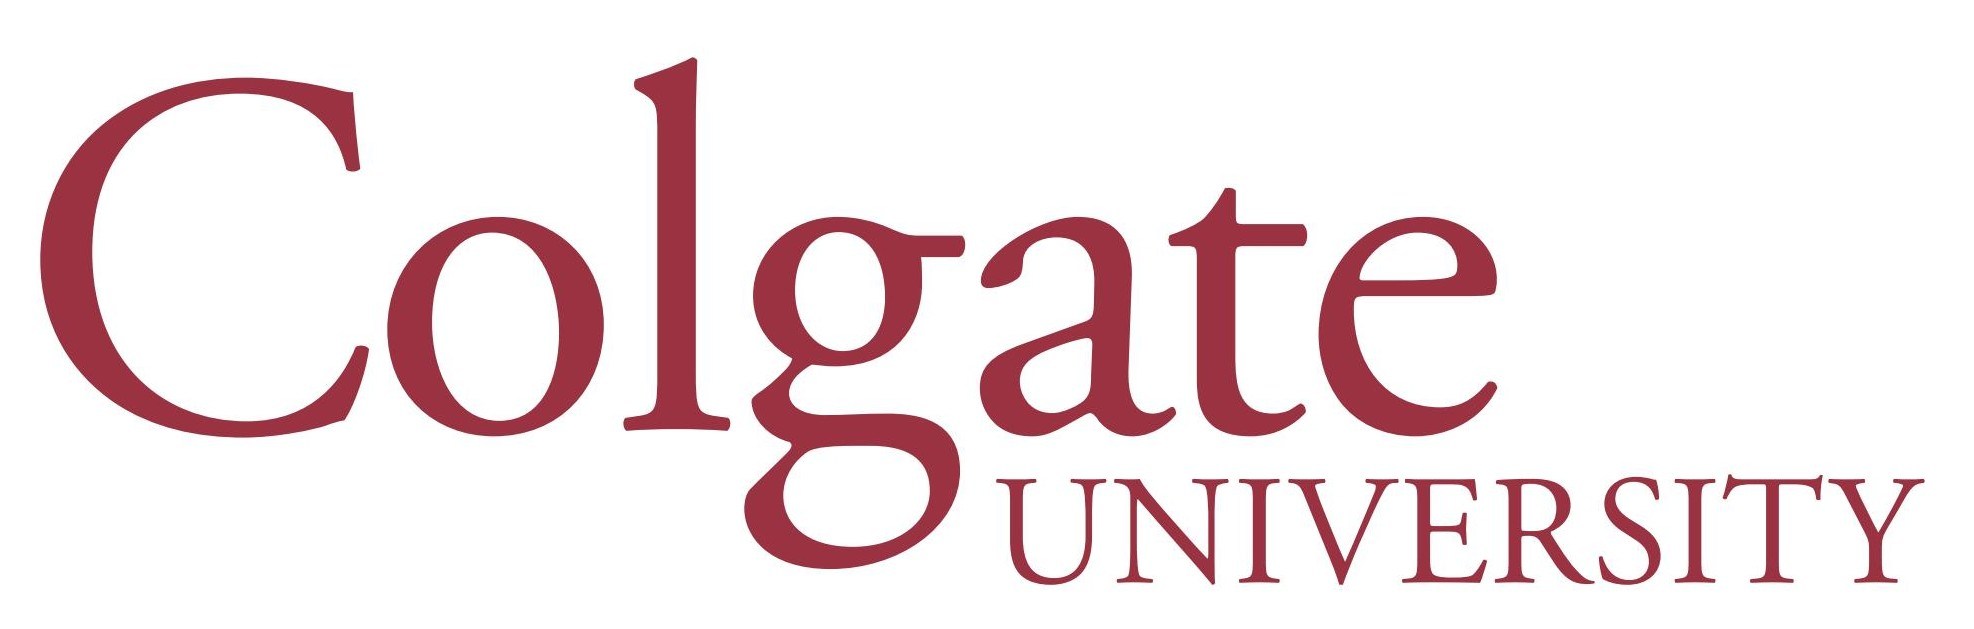 colgate_university_logo.jpg